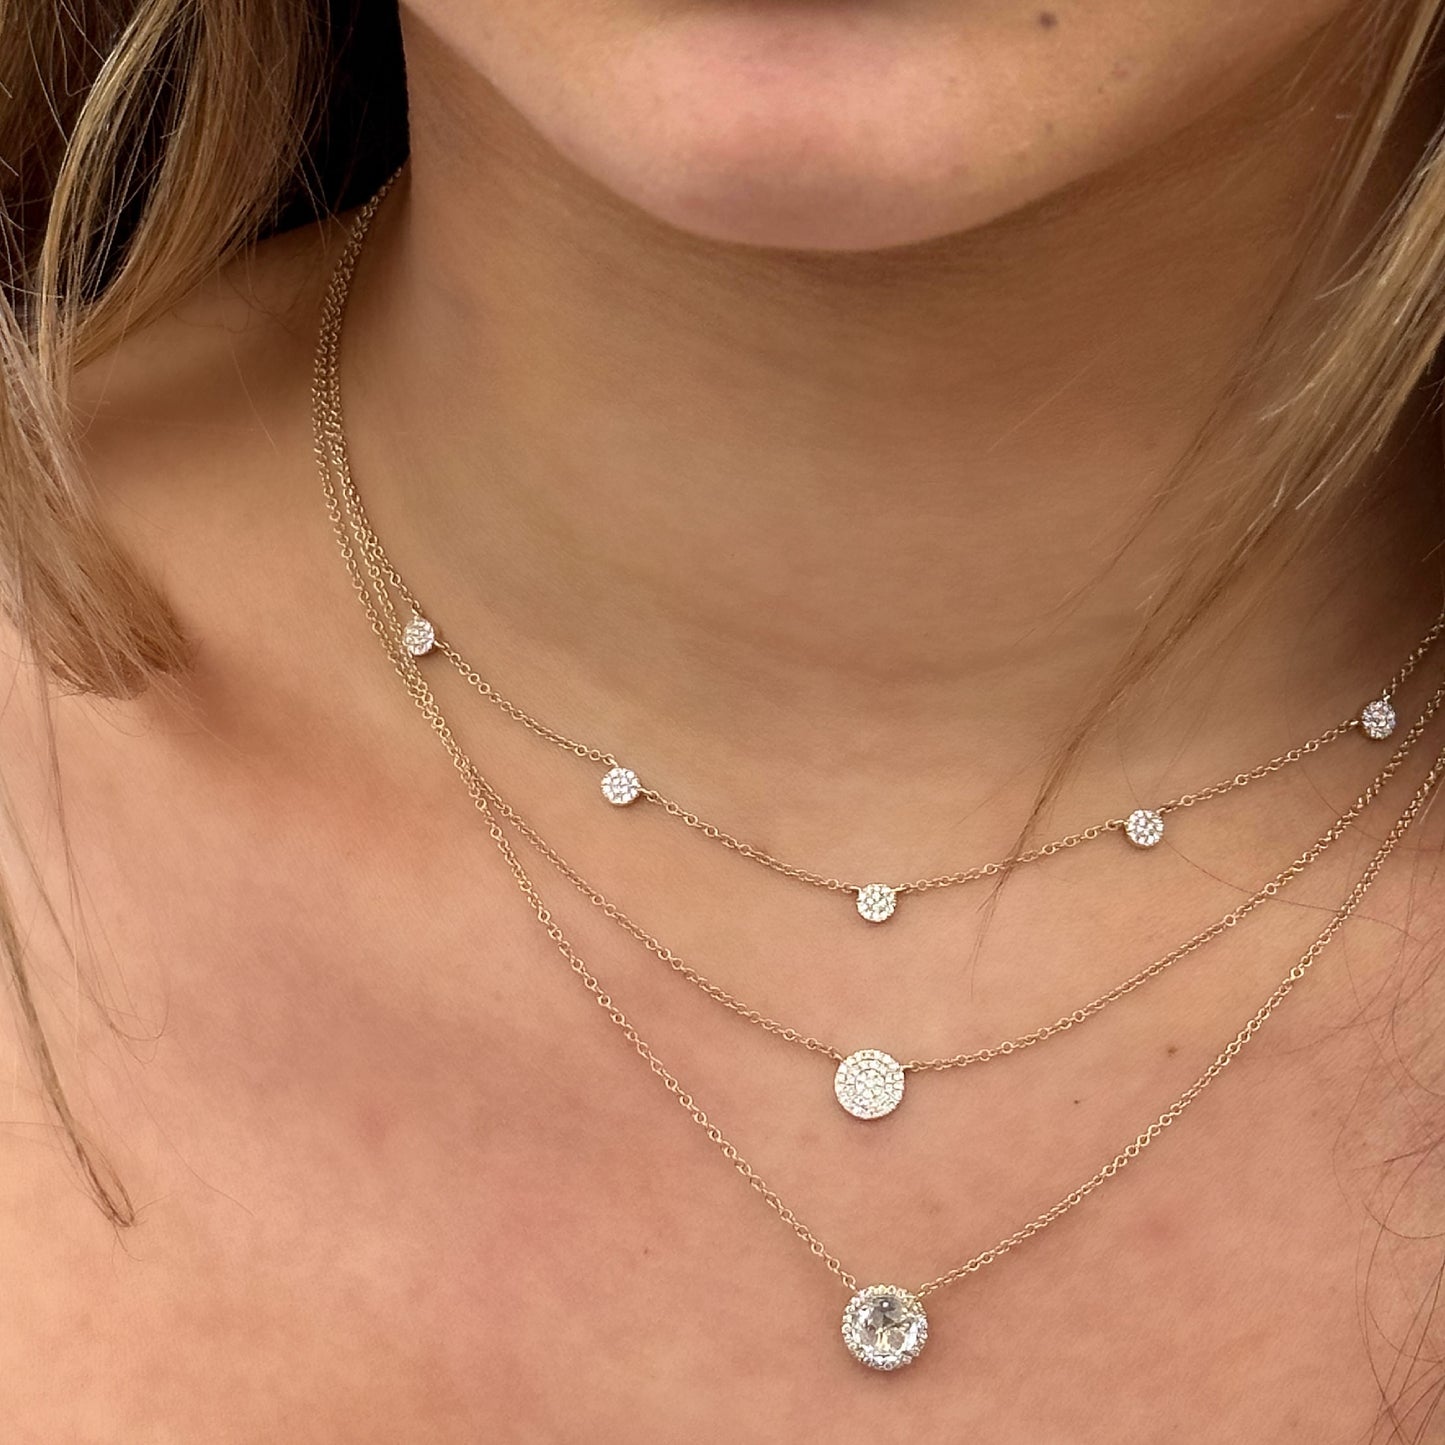 Medium 14k Gold & Diamond Disc Necklace from Alexandra Marks jewelry